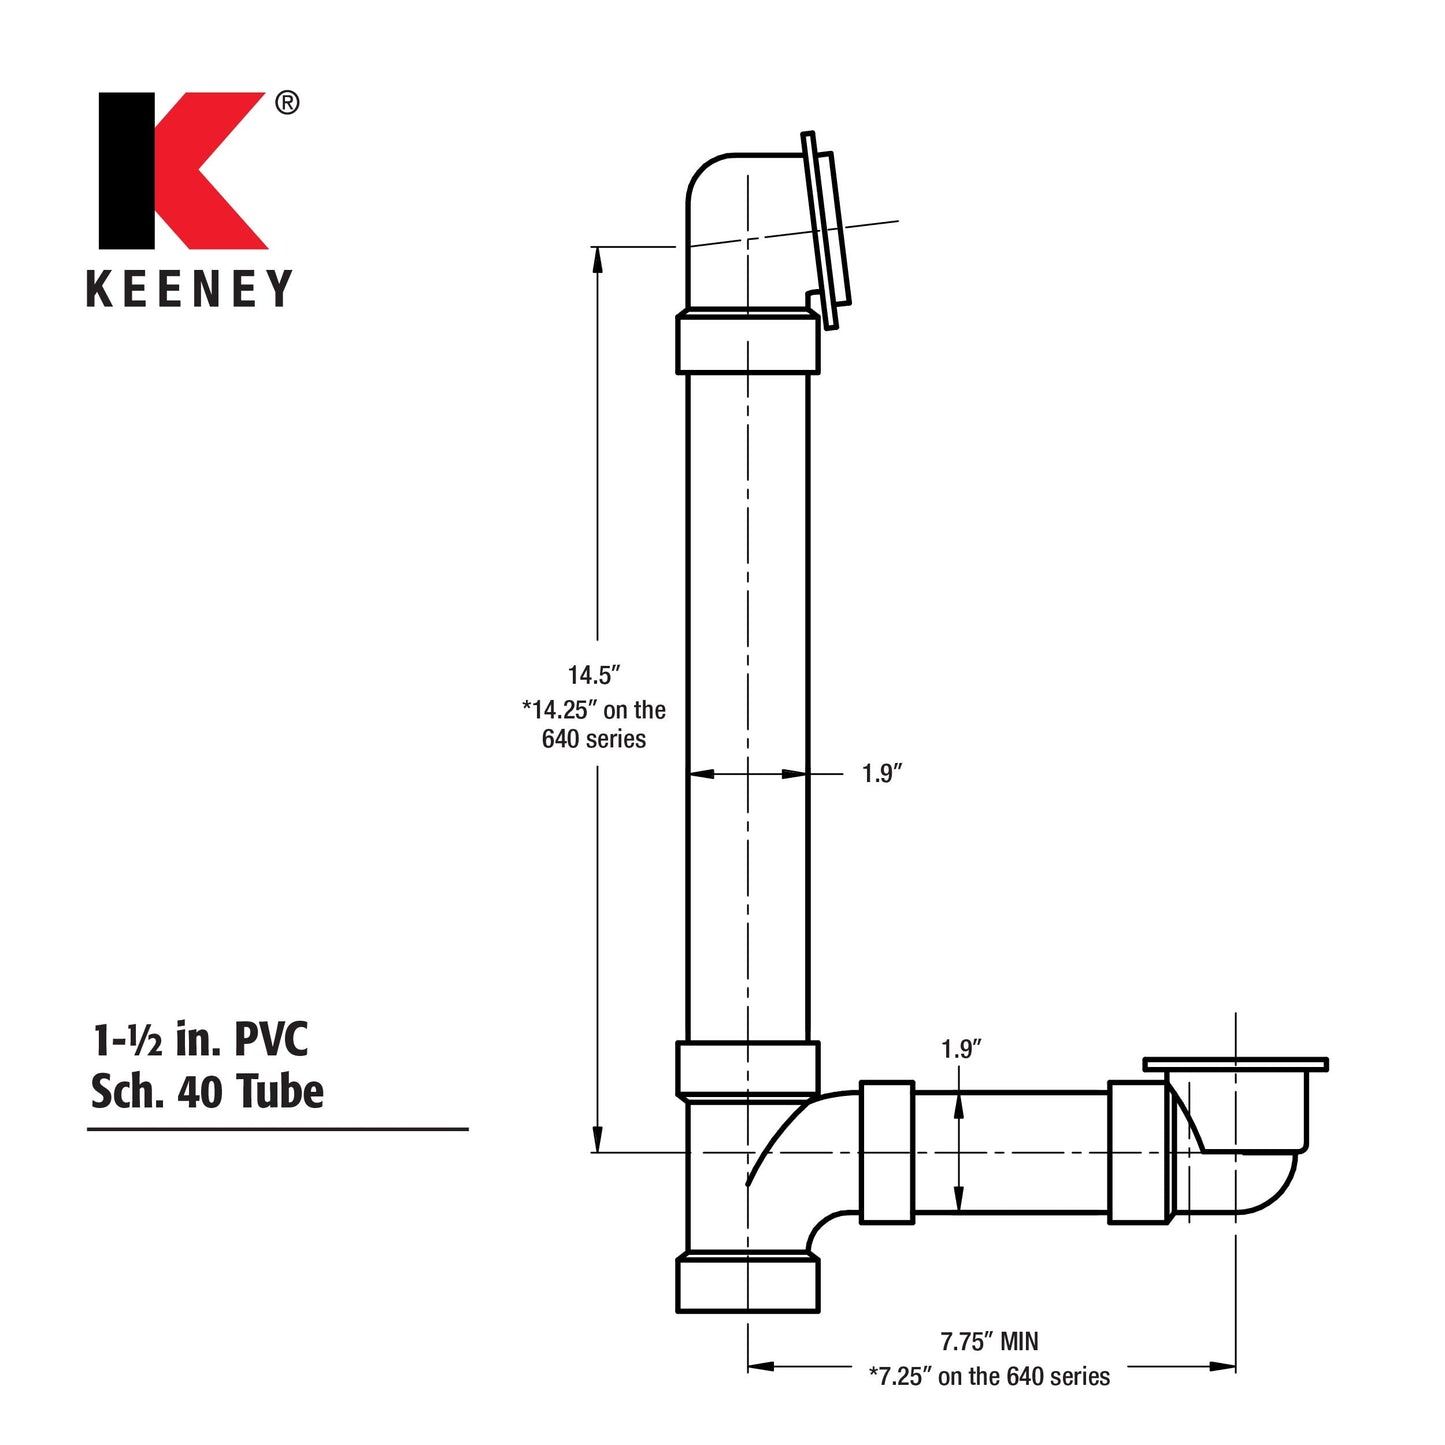 Keeney K630PVCDSBN Foot Lok Stop Bathtub Drain Kit, 1-1/2-Inch Fits All Standard Size Tubs, Brushed Nickel